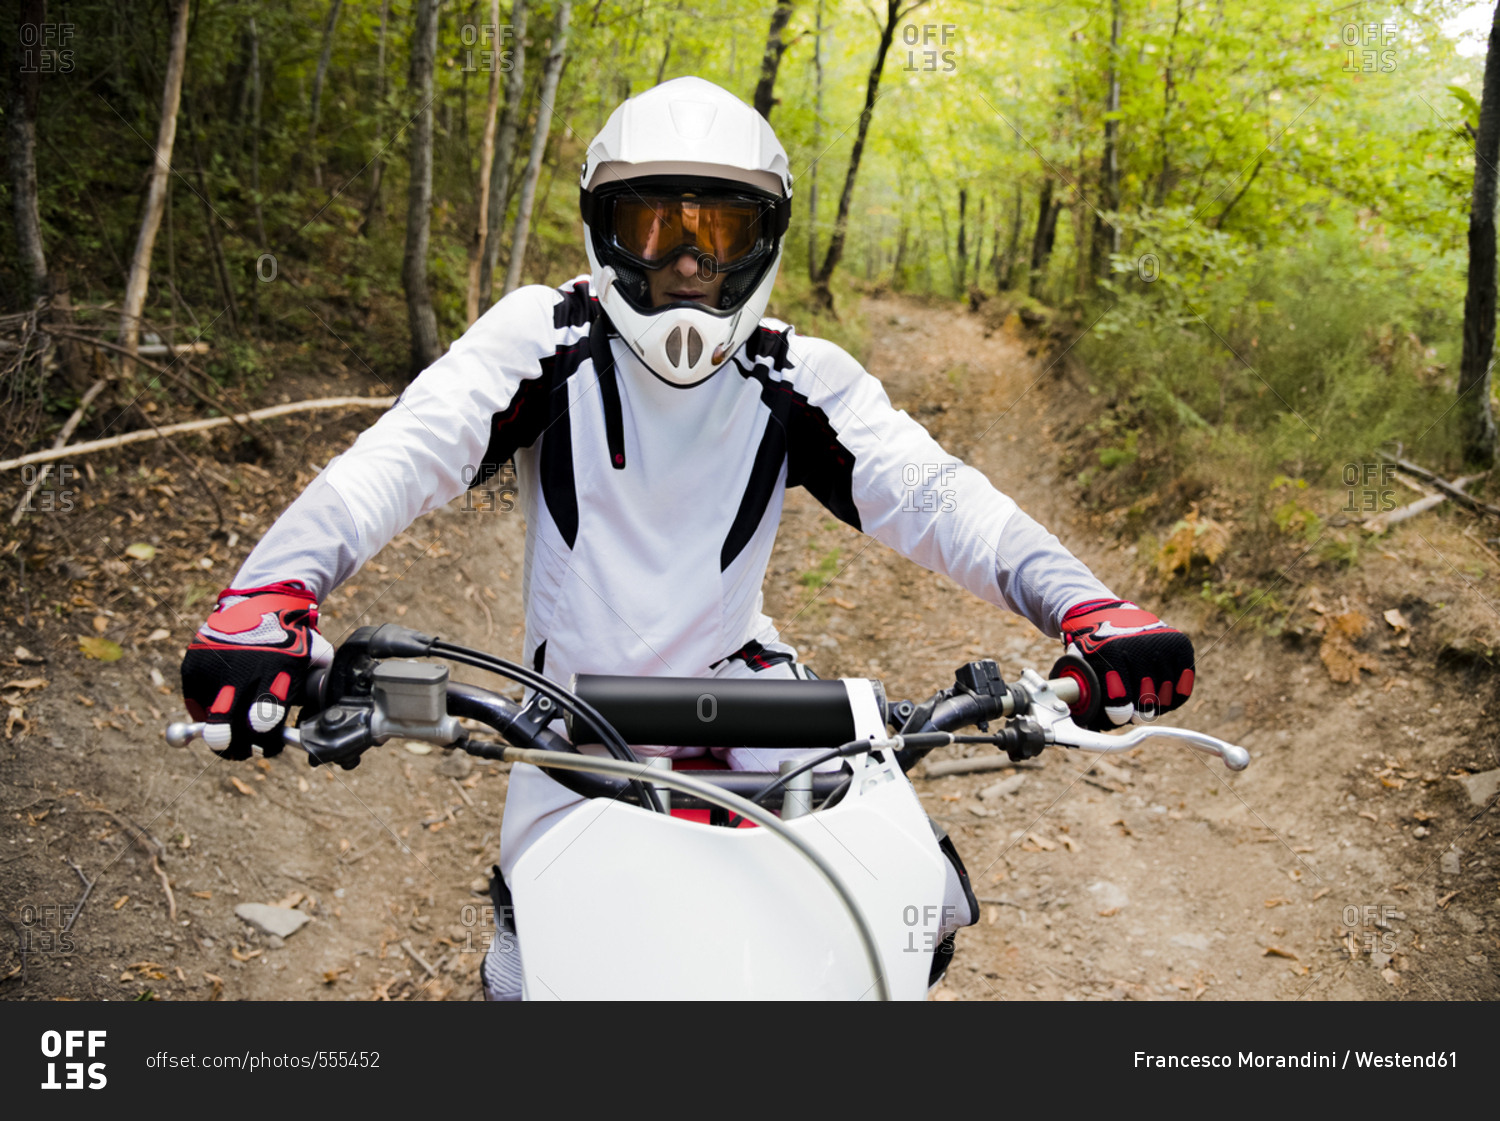 Italy- Motocross biker ridding in Tuscan forest